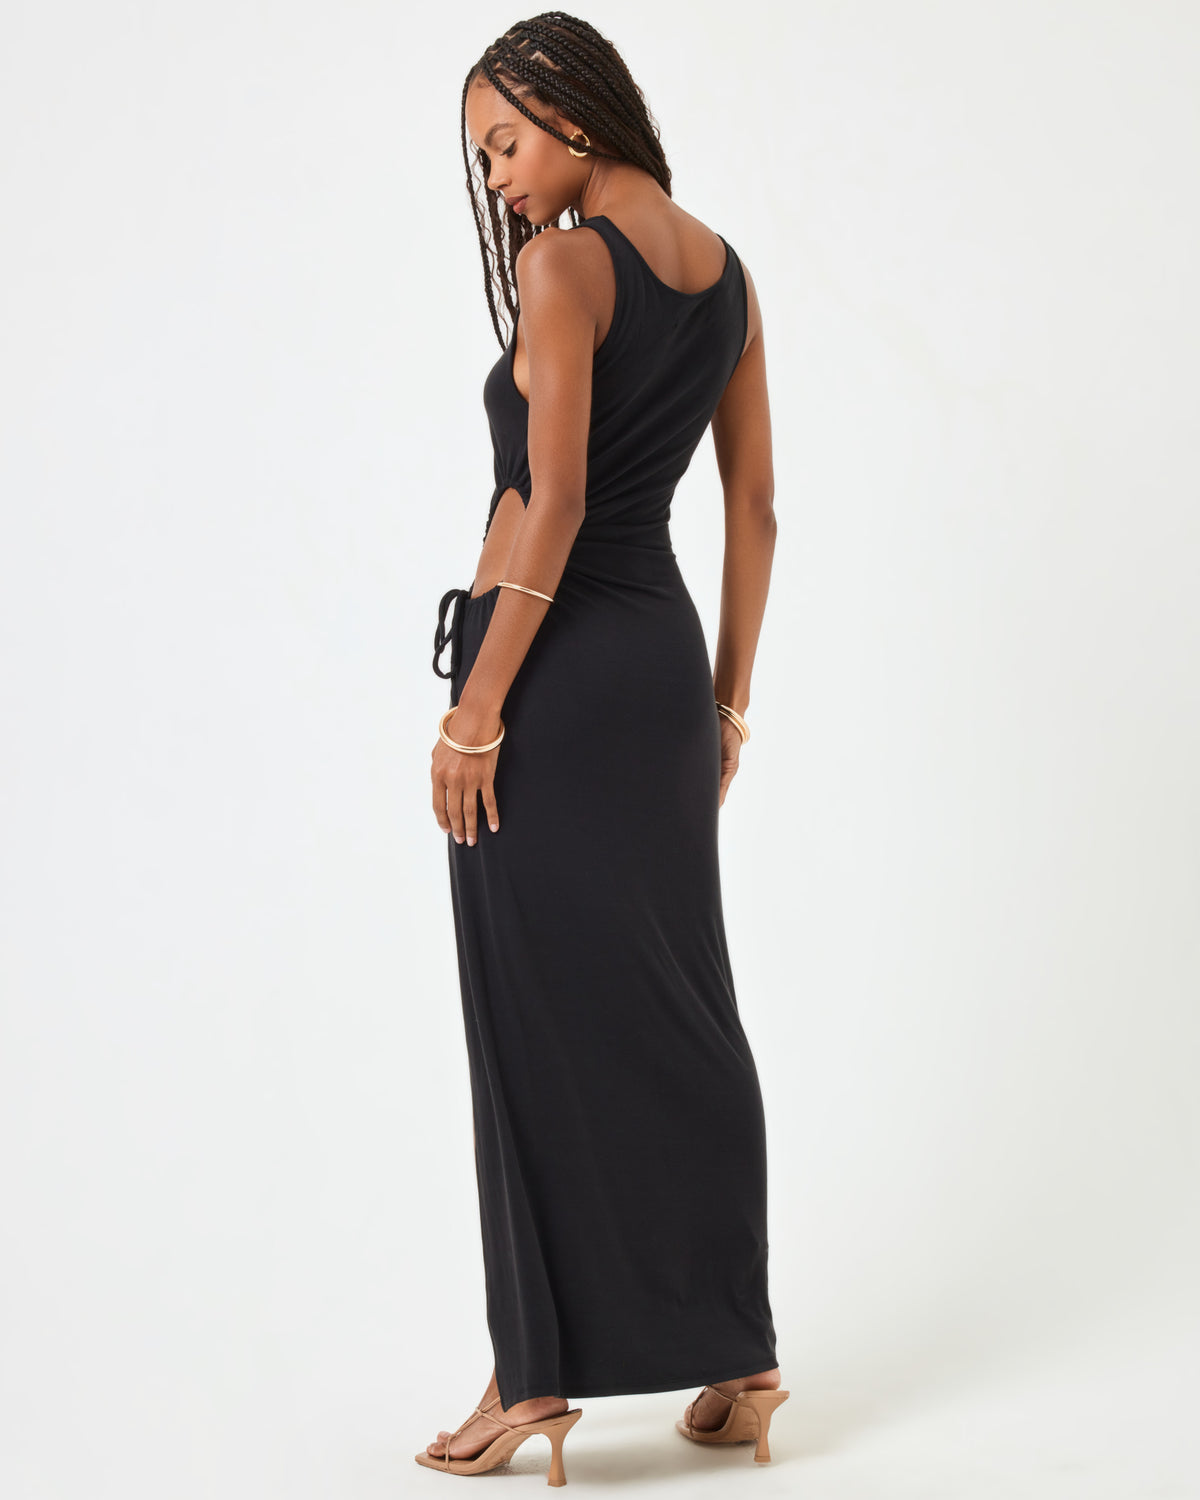 Tiana Dress - Black Black | Model: Taelor  (size: S)